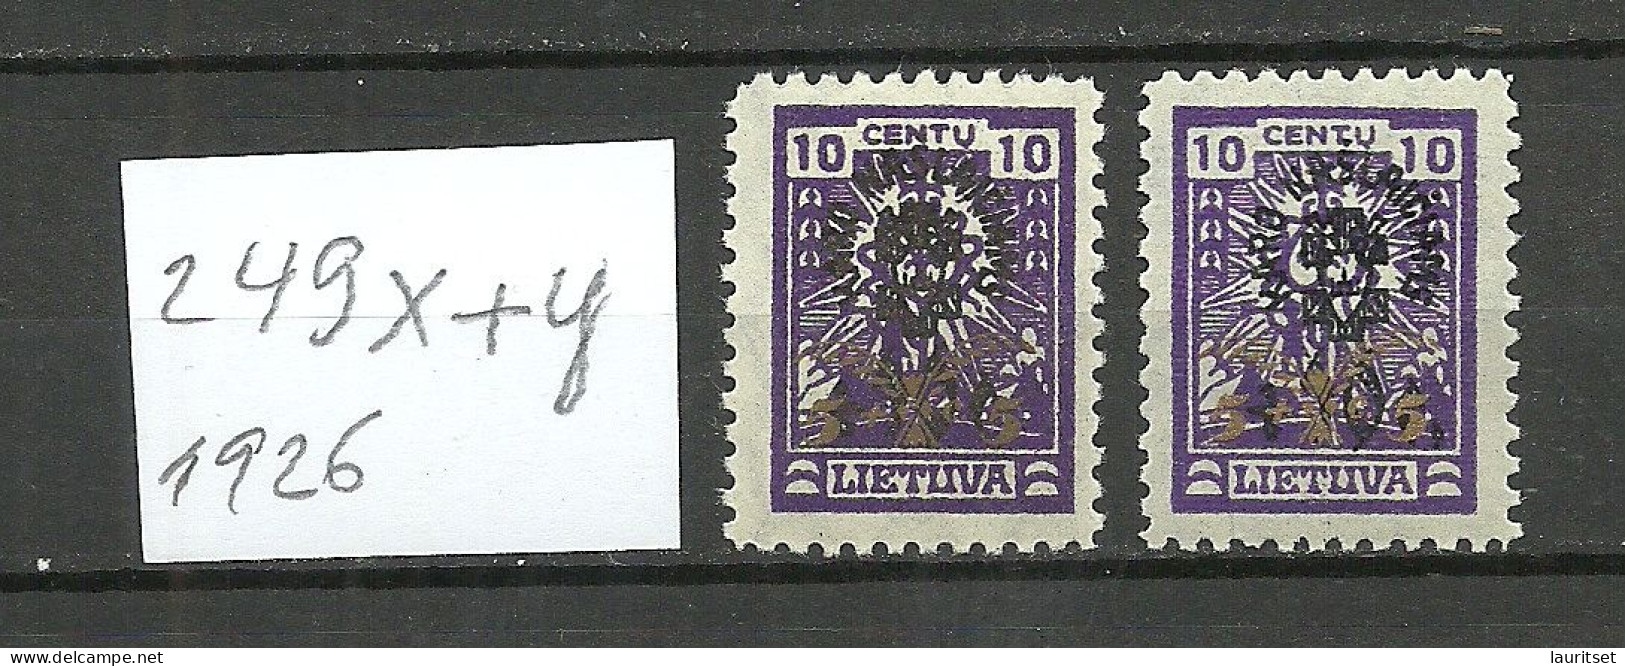 LITAUEN Lithuania 1926 Michel 249 X (wm 3) + 249 Y (wm 5) * - Litauen